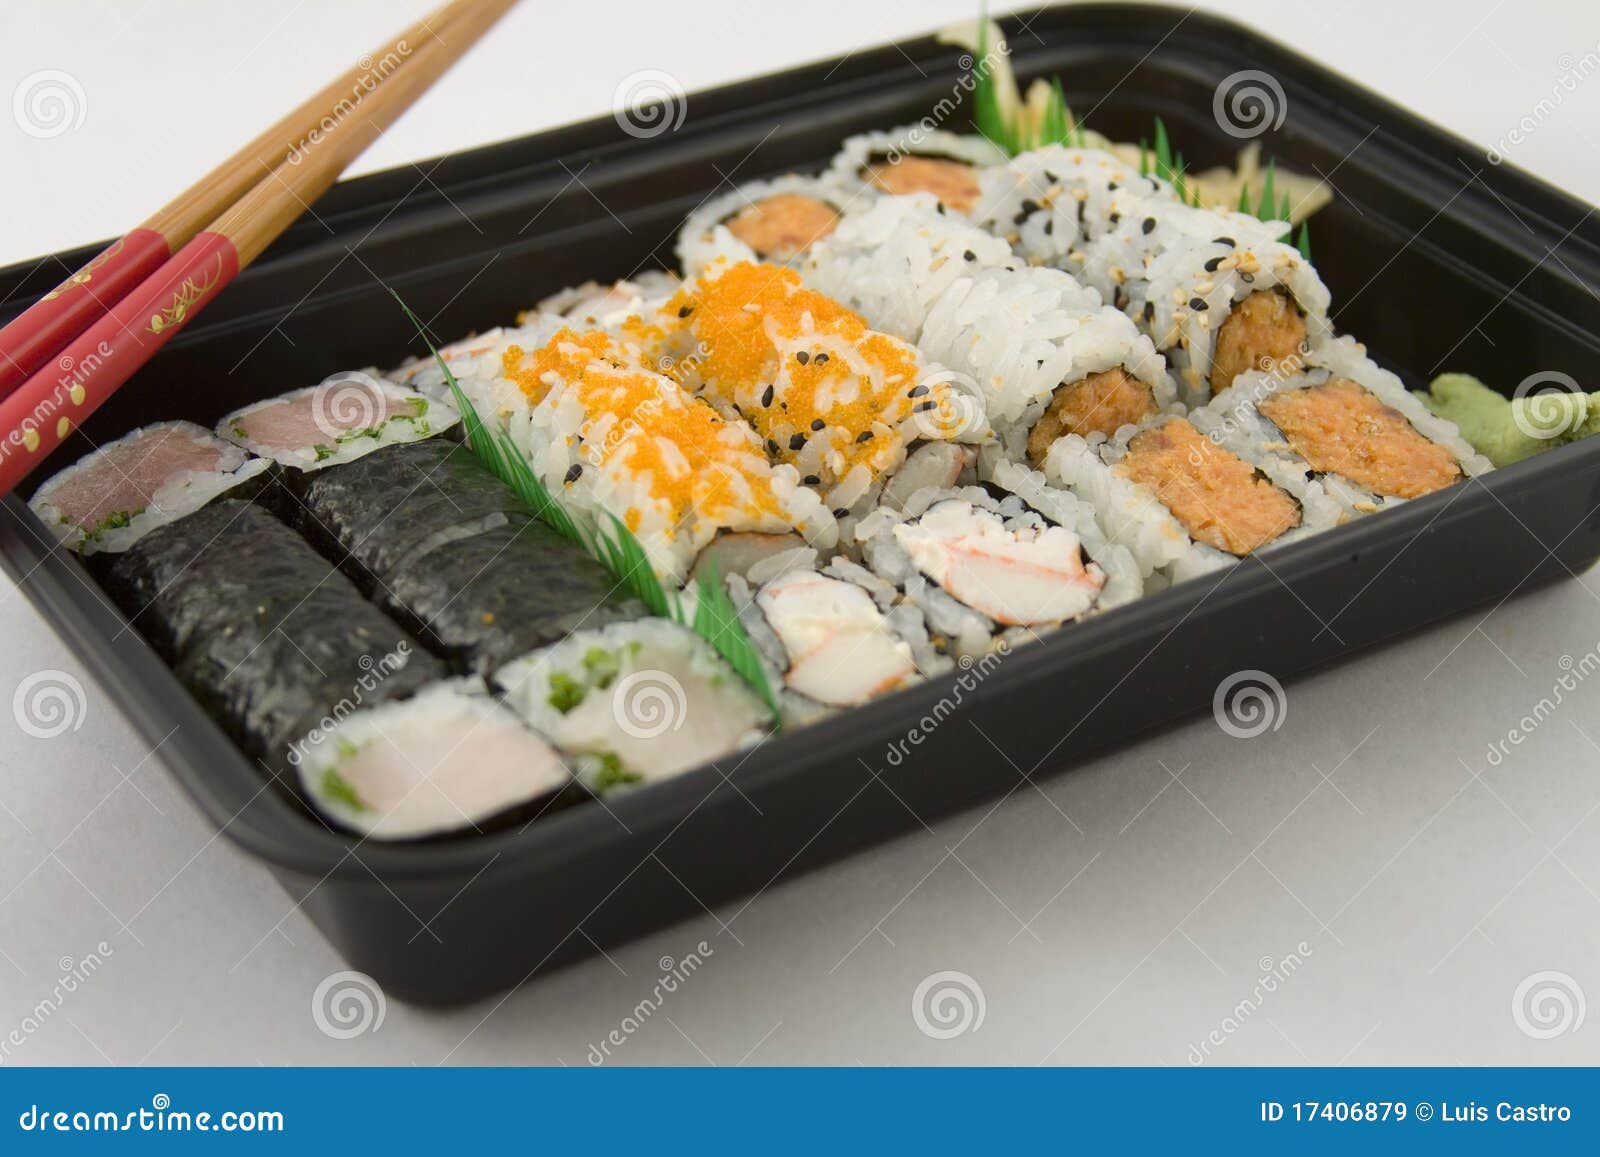 takeout sushi